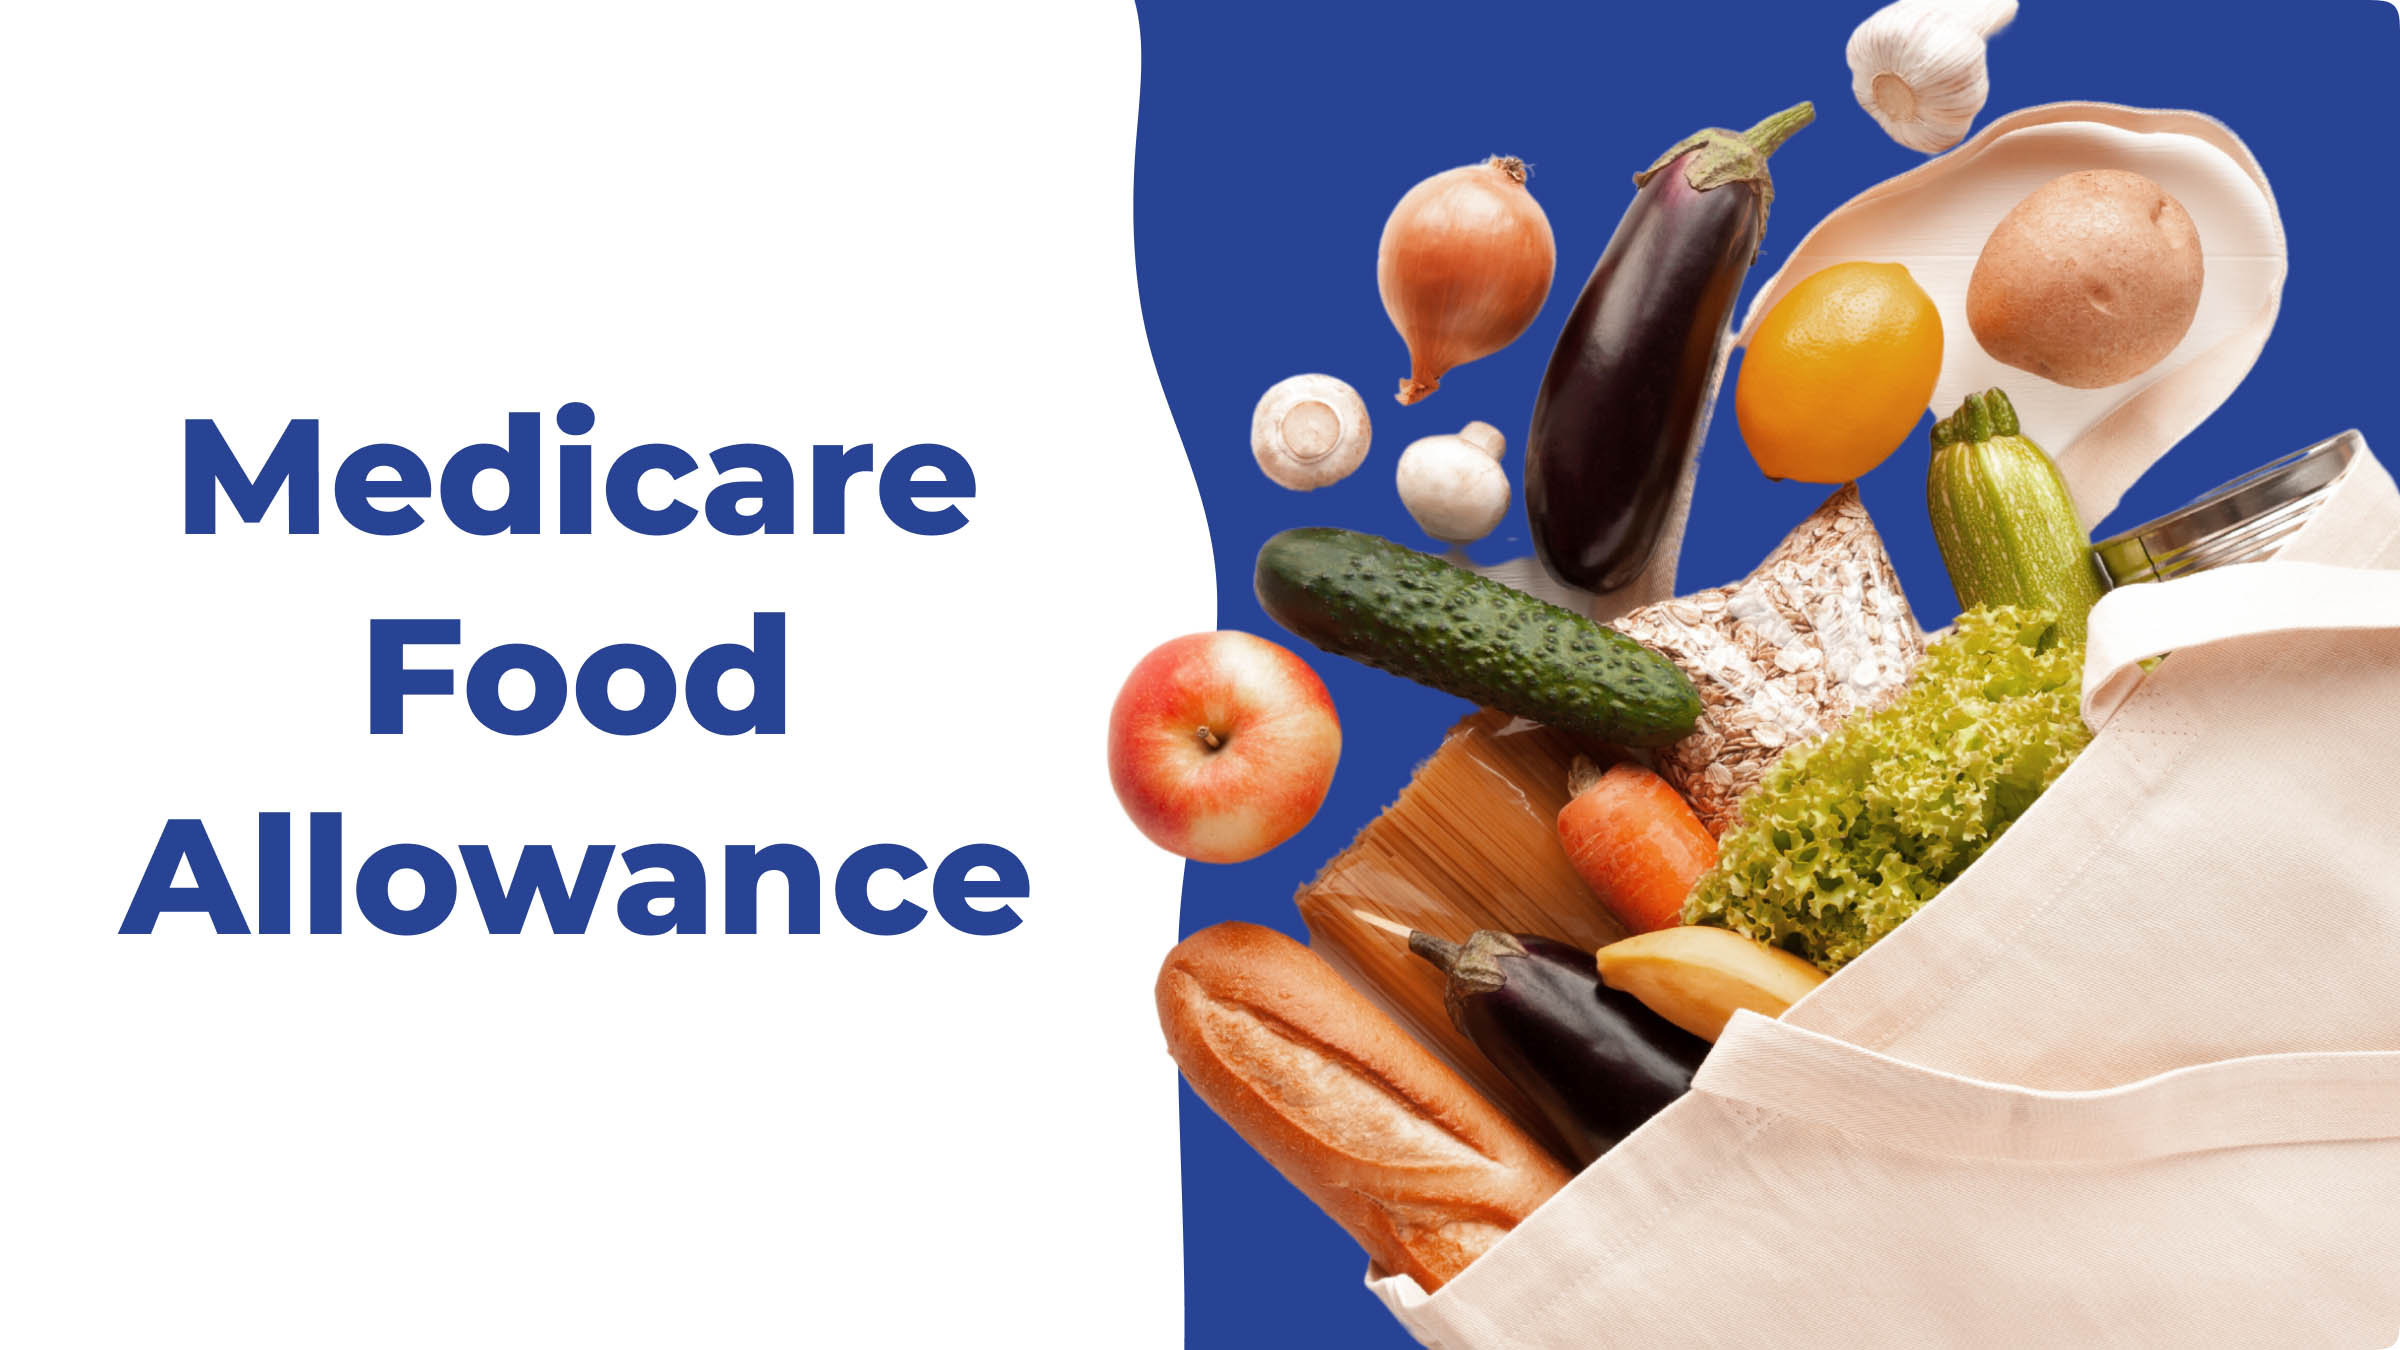 Medicare Food Allowance